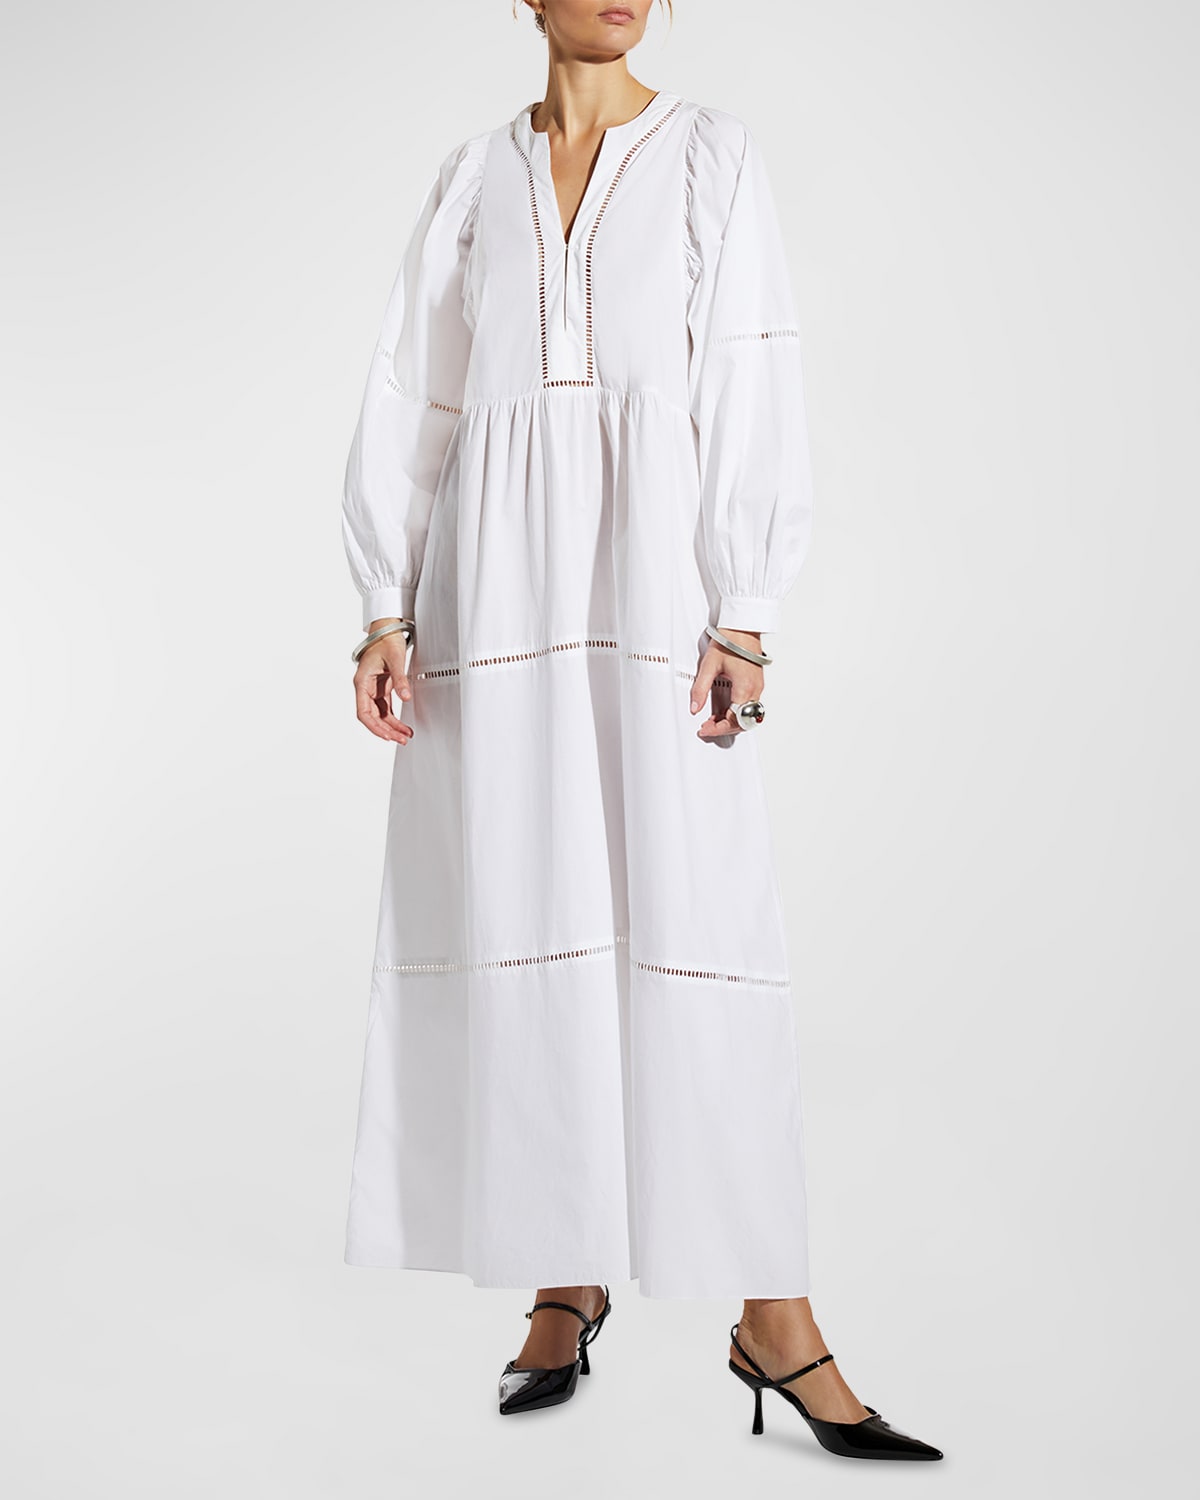 CARESTE Clare Tiered Lace-Inset Blouson-Sleeve Dress